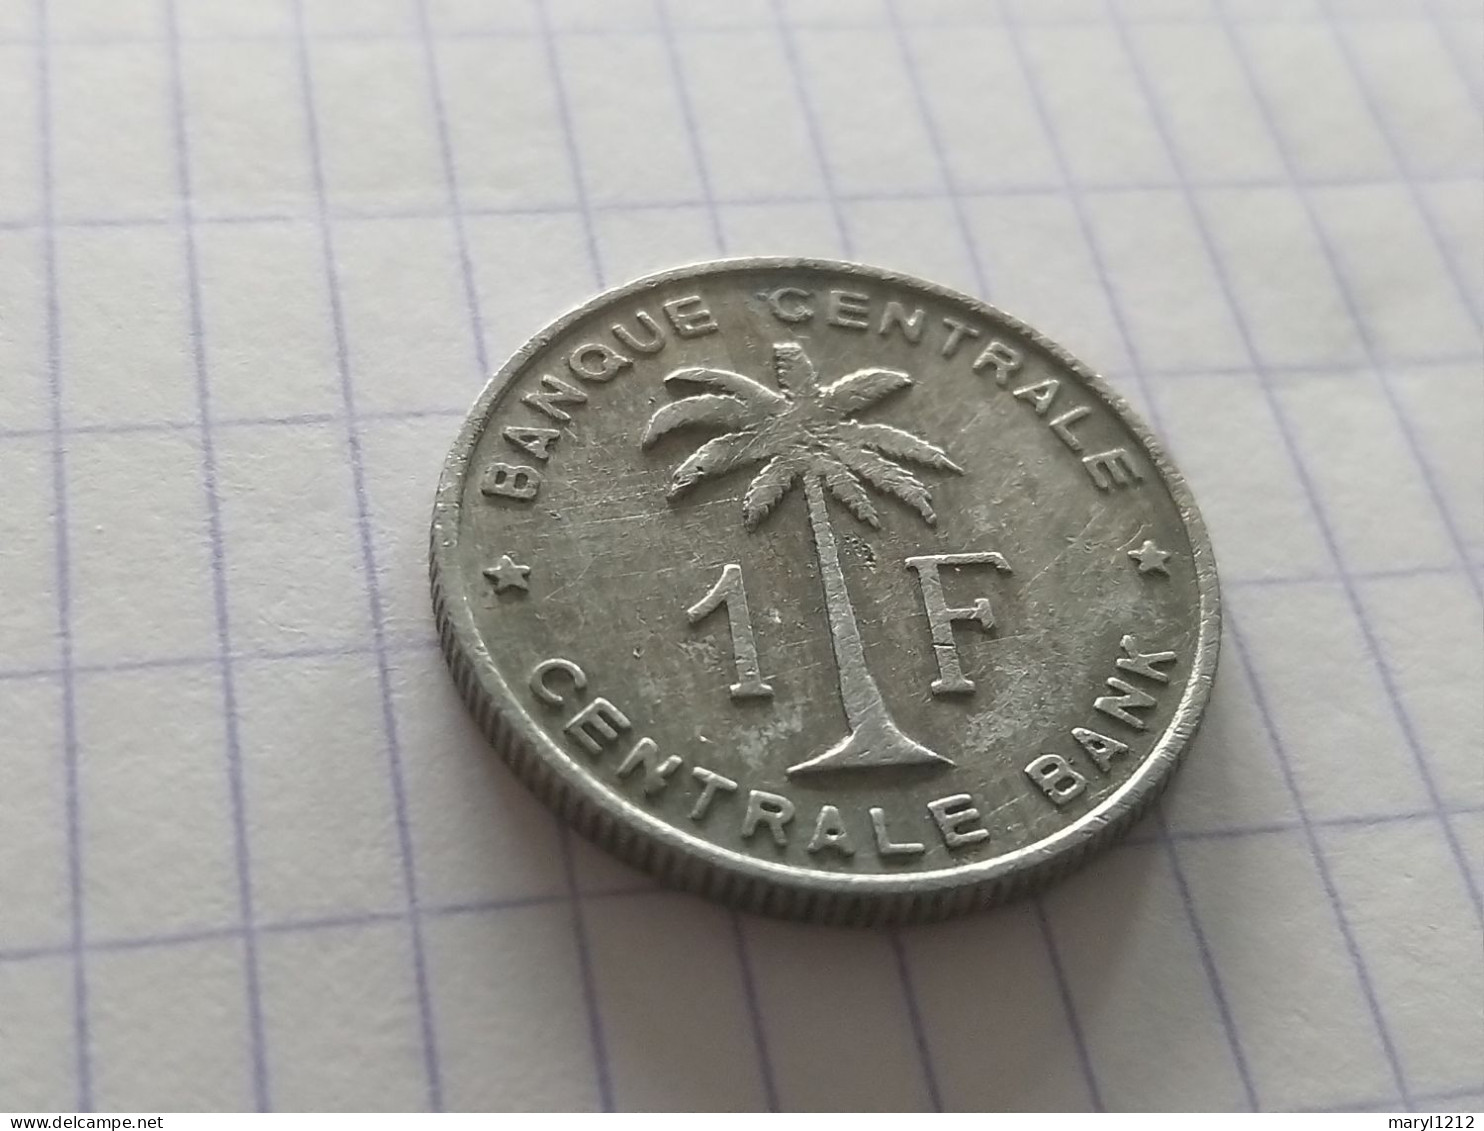 5 Pièce De 1 Francs Banque Centrale Congo Belge Ruanda-Urundi 1958 (3) Et 1959 (2) - 1951-1960: Baudouin I